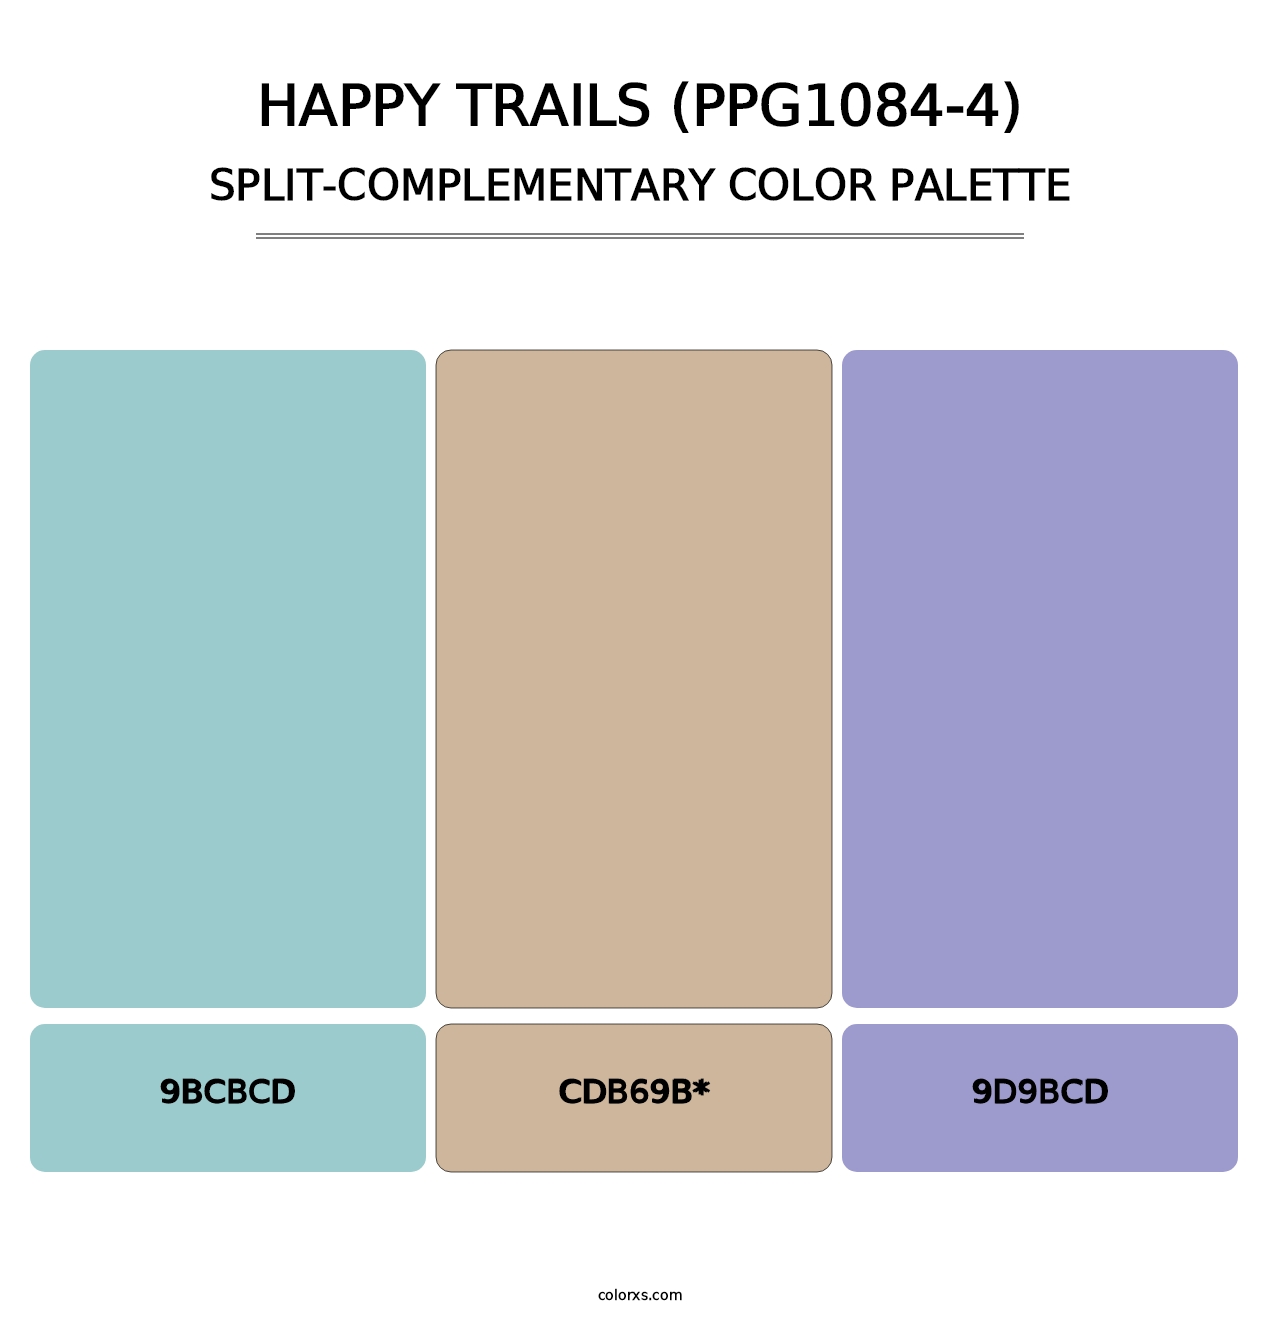 Happy Trails (PPG1084-4) - Split-Complementary Color Palette